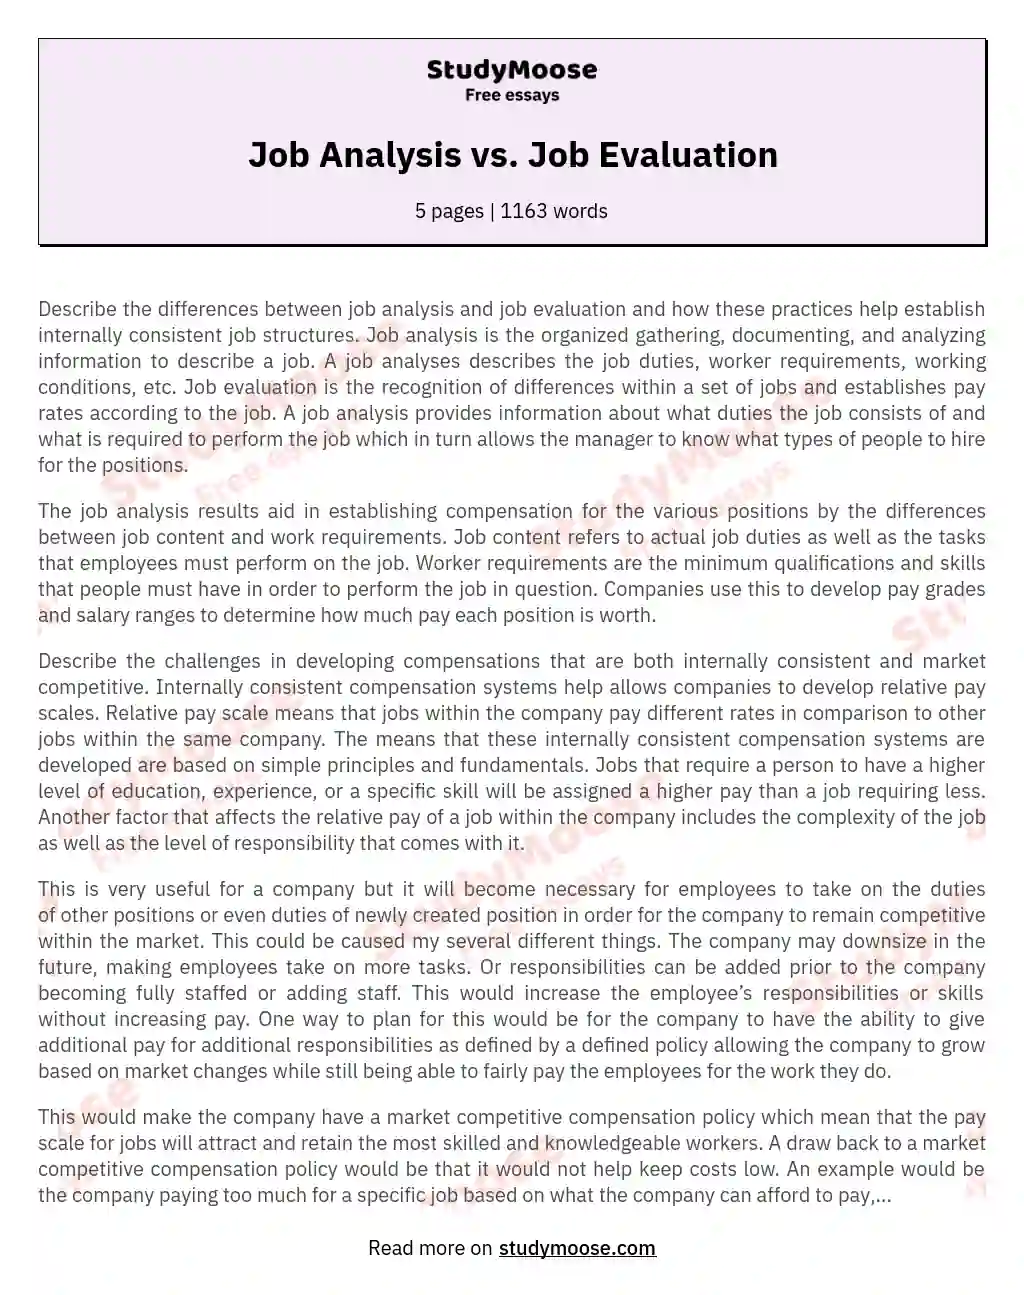 Job Analysis vs. Job Evaluation essay